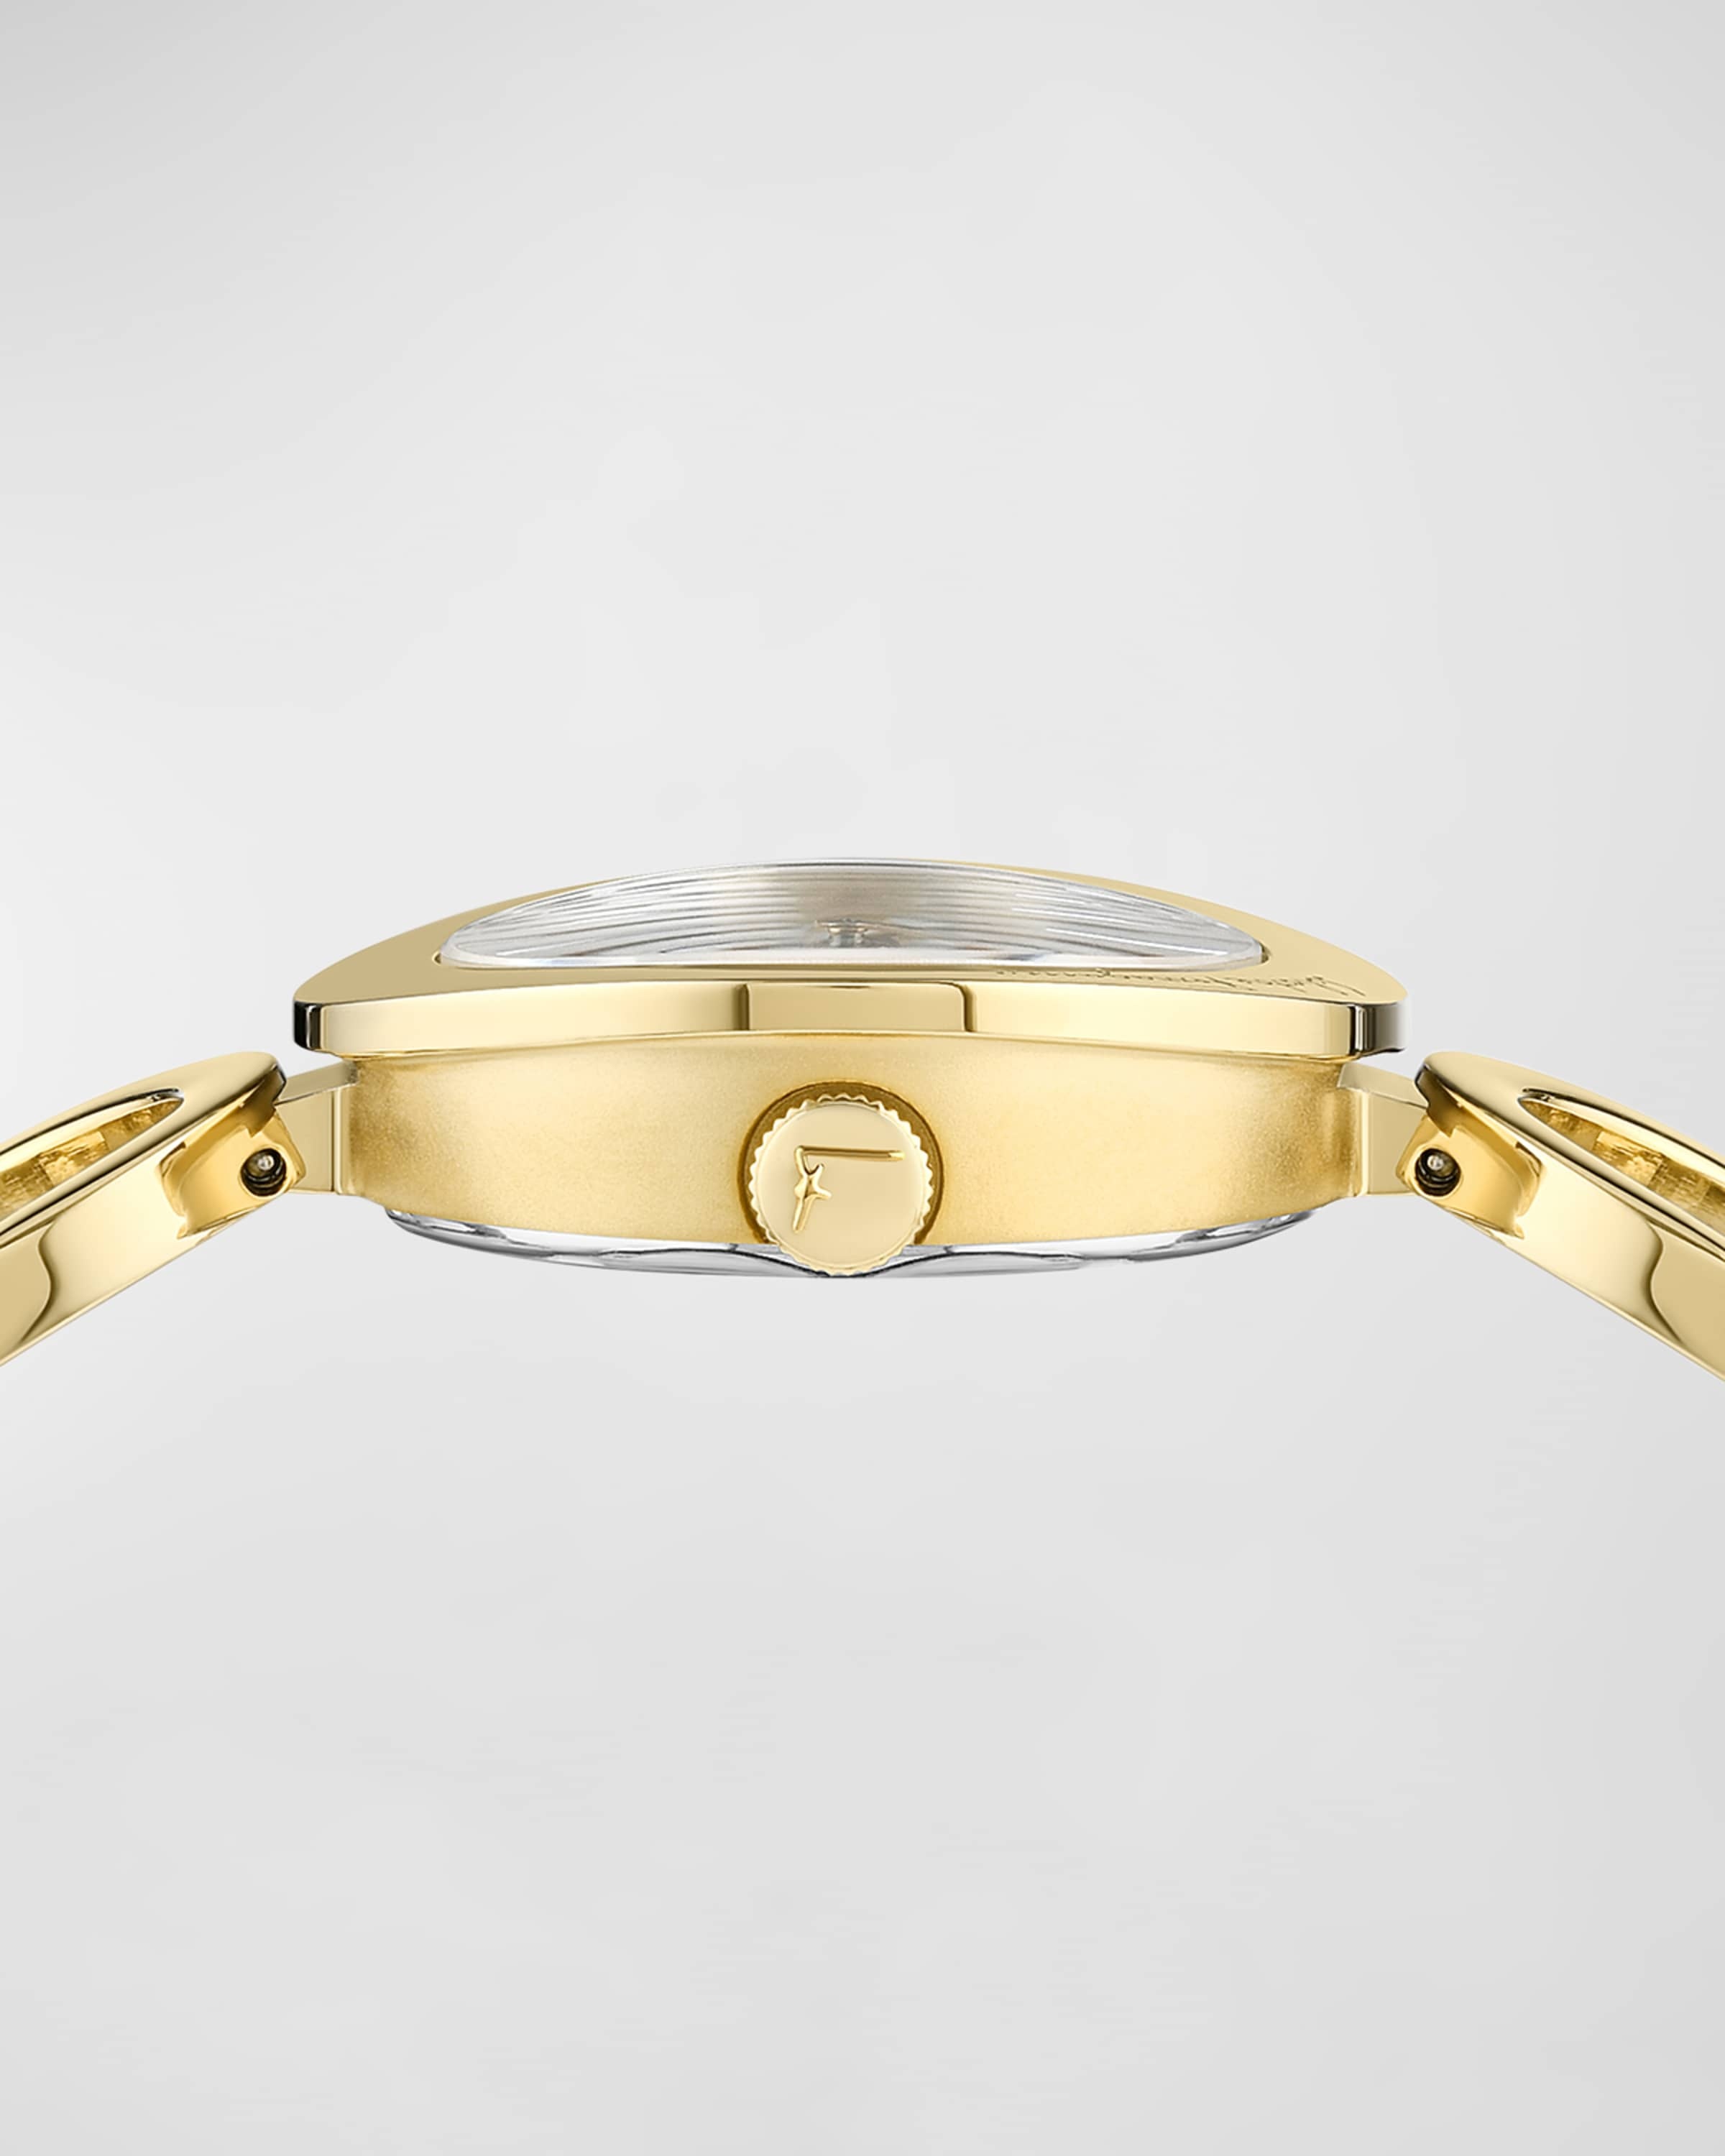 28mm Gancino Watch with Bracelet Strap, Golden - 4